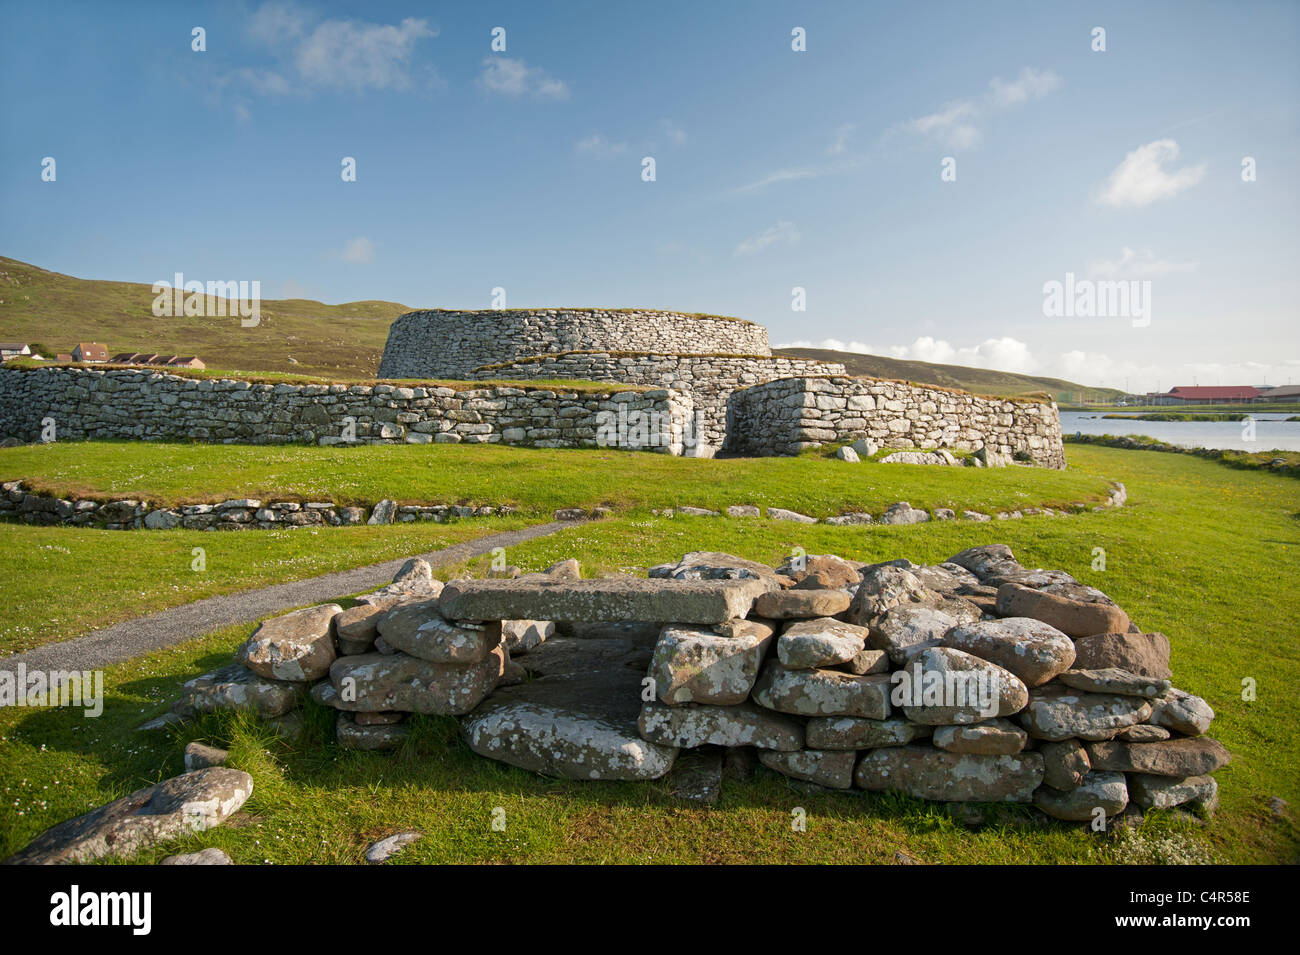 Clikimin Broch, Lerwick, Shetland Isles, Scotland. United Kingdom. SCO 7276. Stock Photo